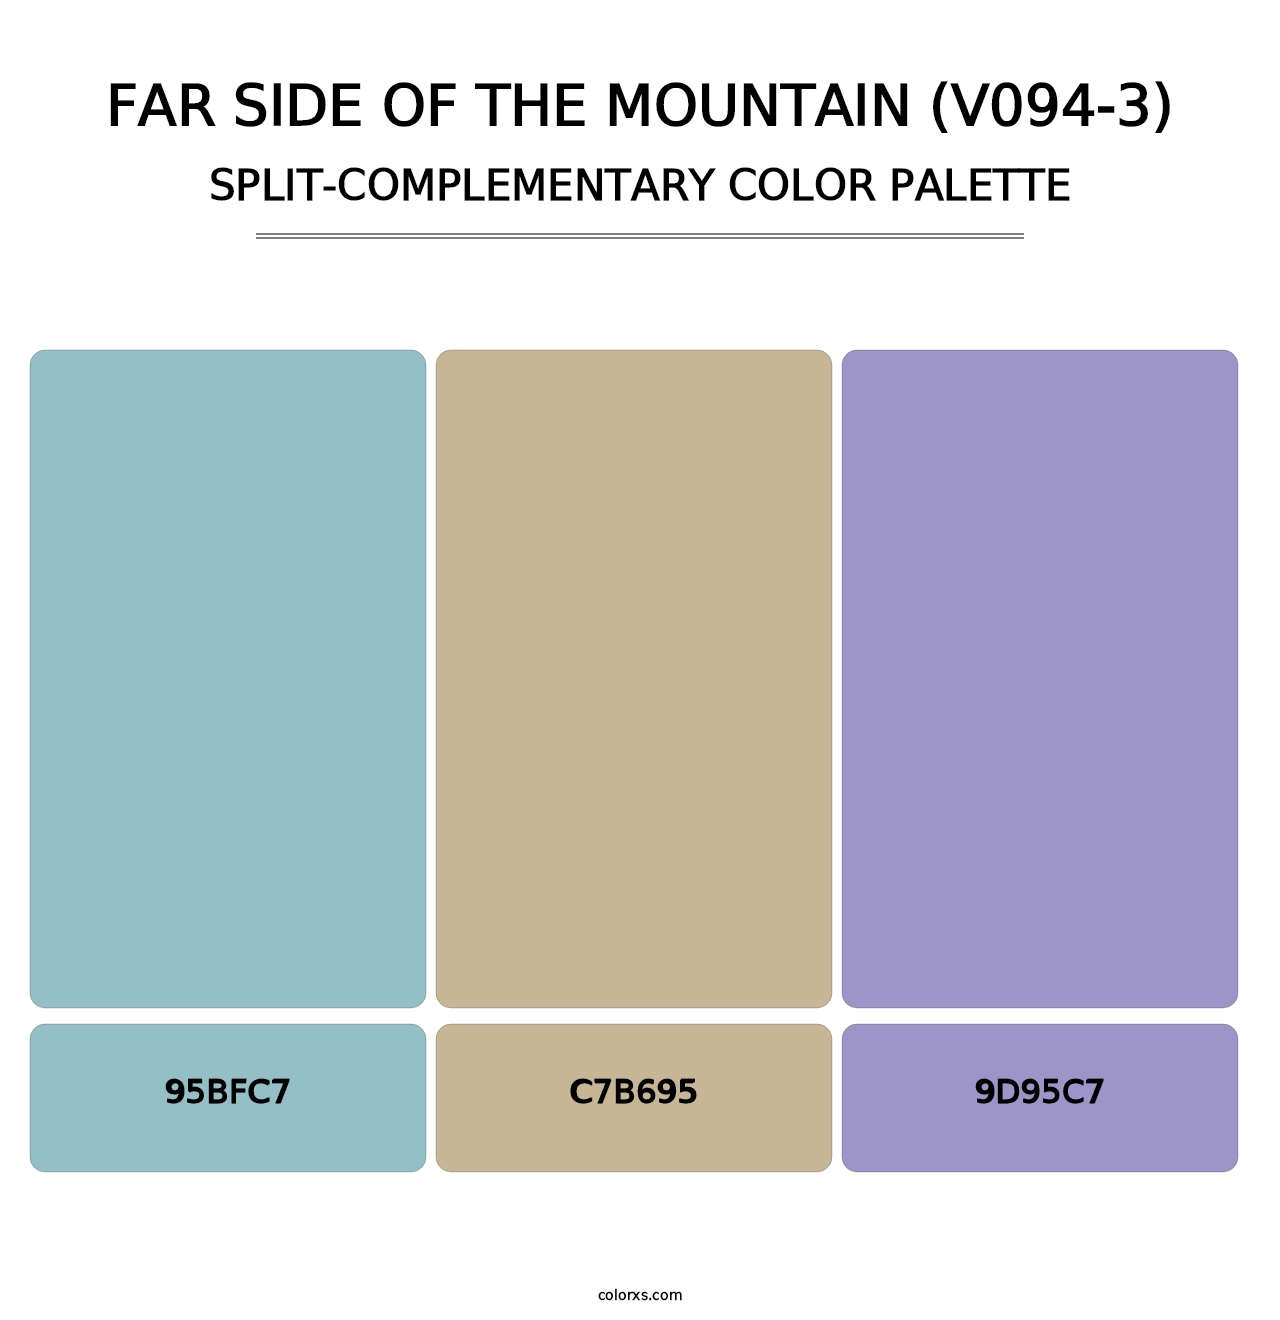 Far Side of the Mountain (V094-3) - Split-Complementary Color Palette